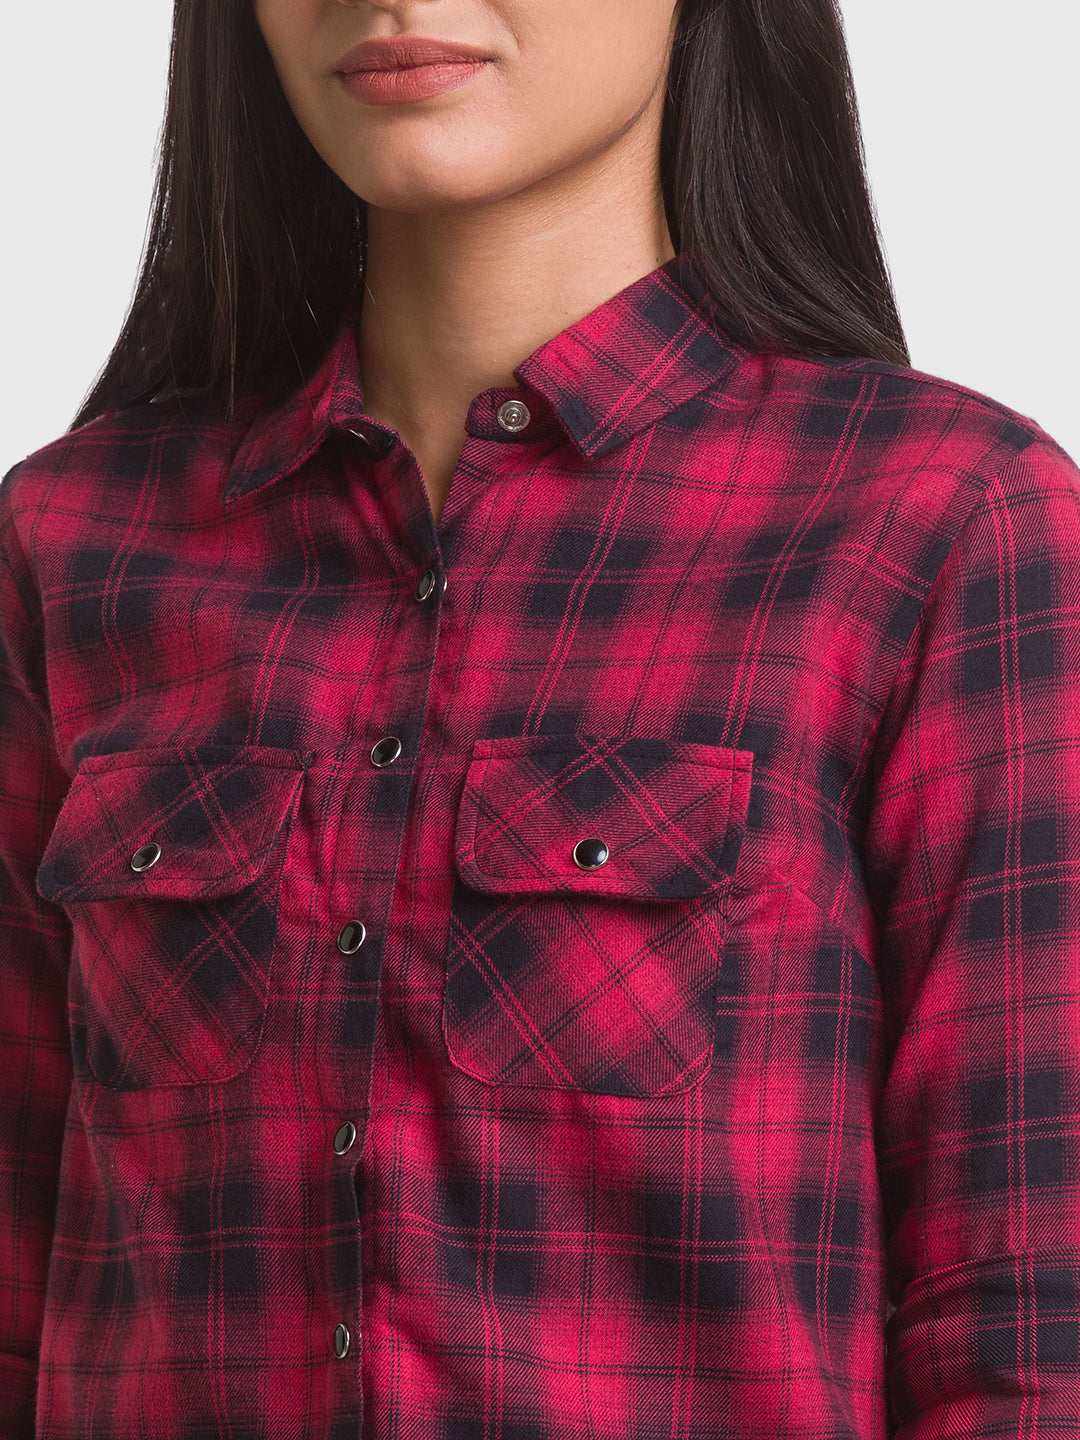 Spykar Red Cotton Full Sleeve Checks Shirts For Women